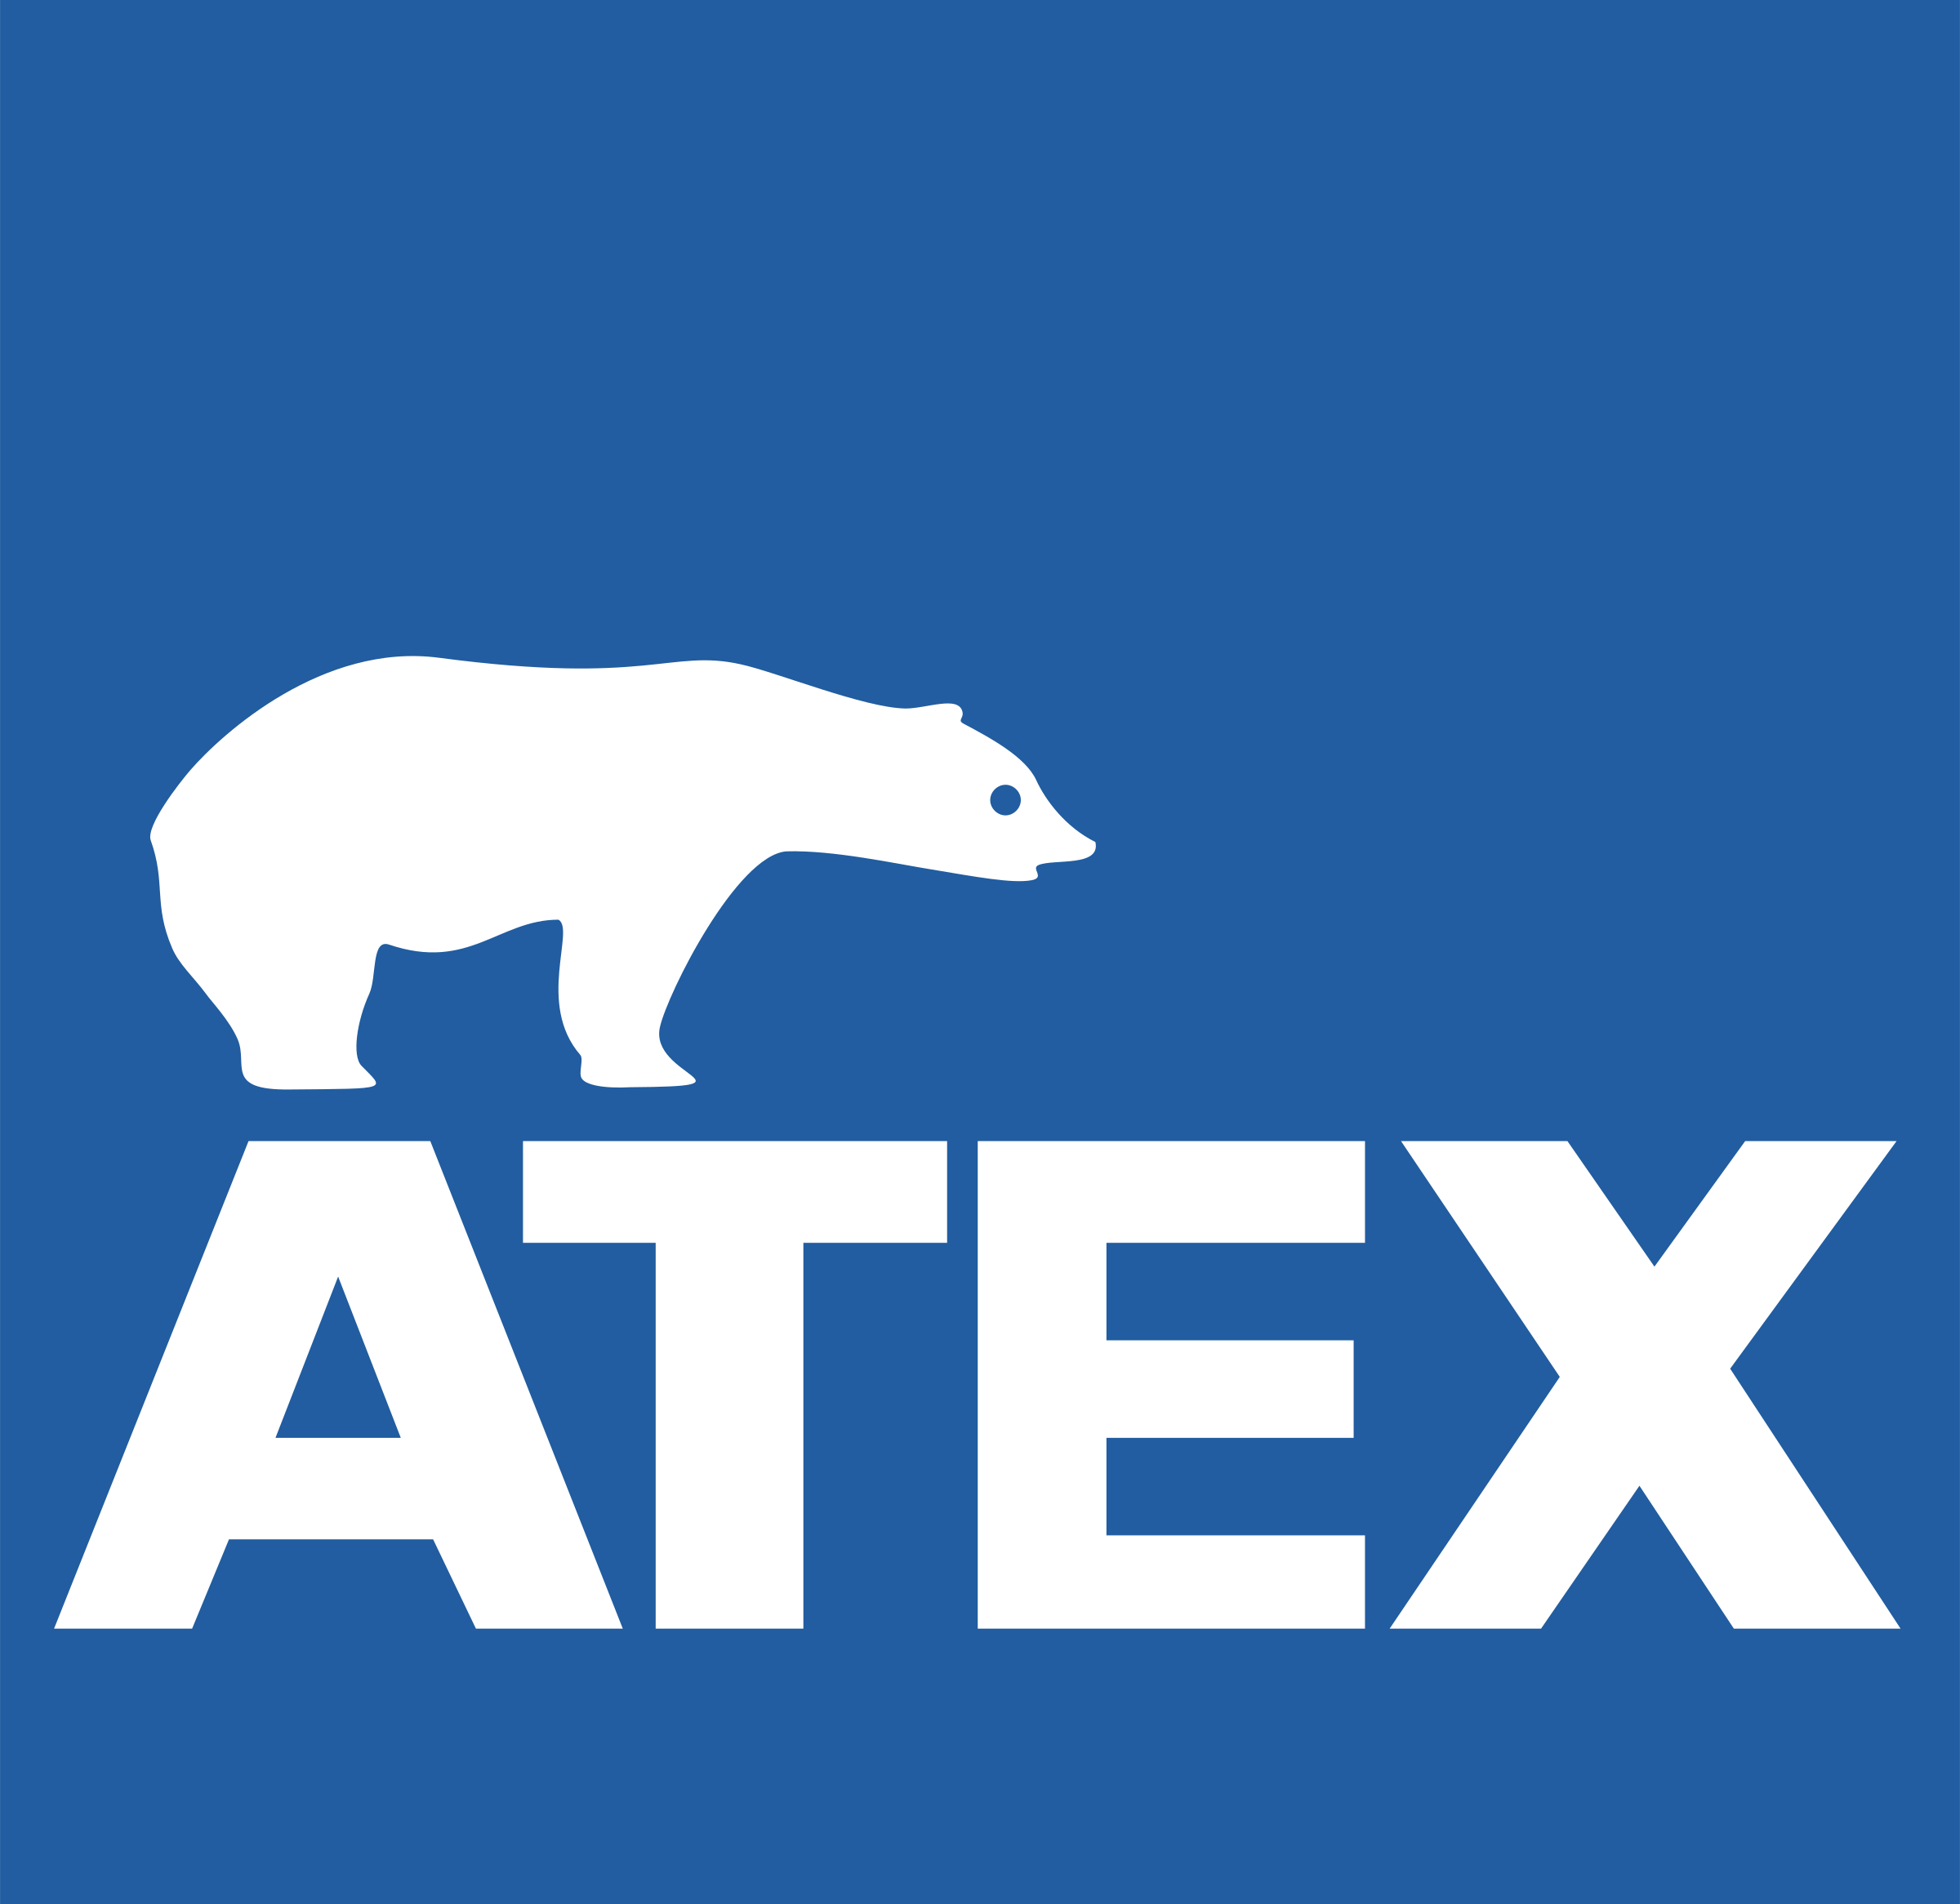 ATEX Logo - Atex Logo PNG Transparent & SVG Vector